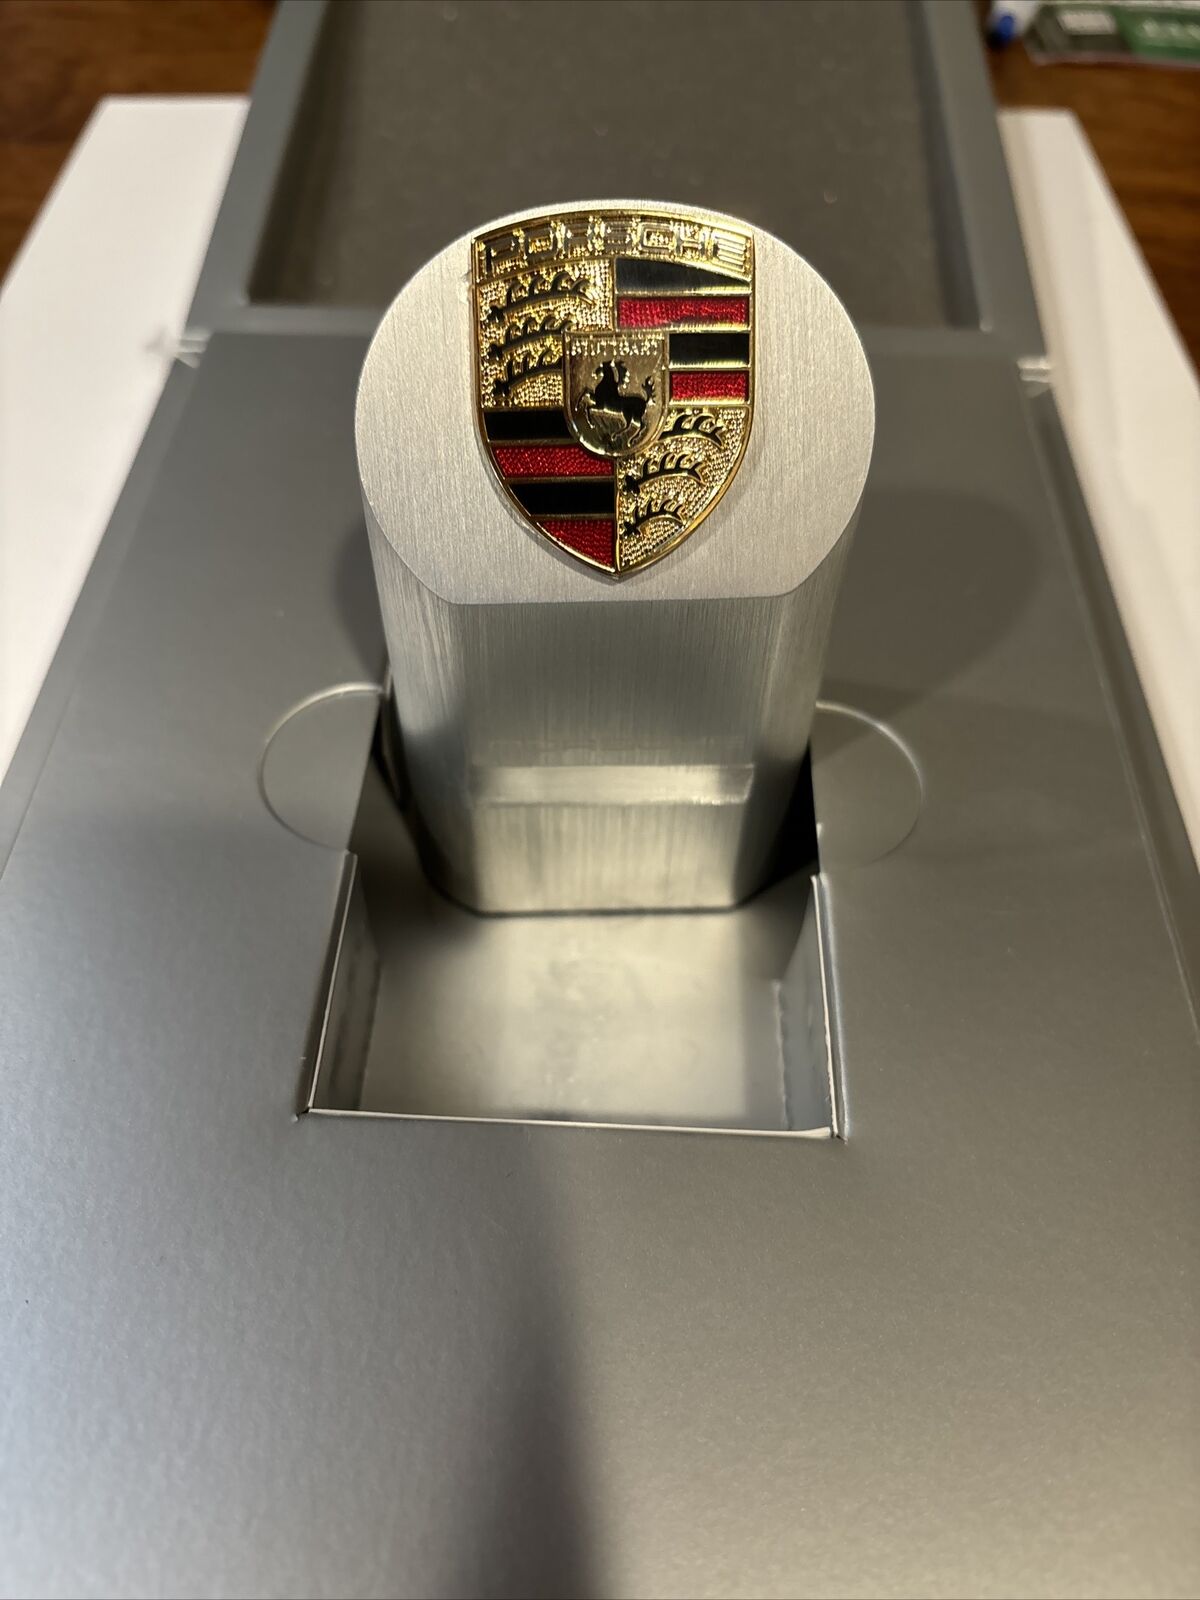 Extremely Rare Porsche desktop aluminum pylon with Porsche original Crest